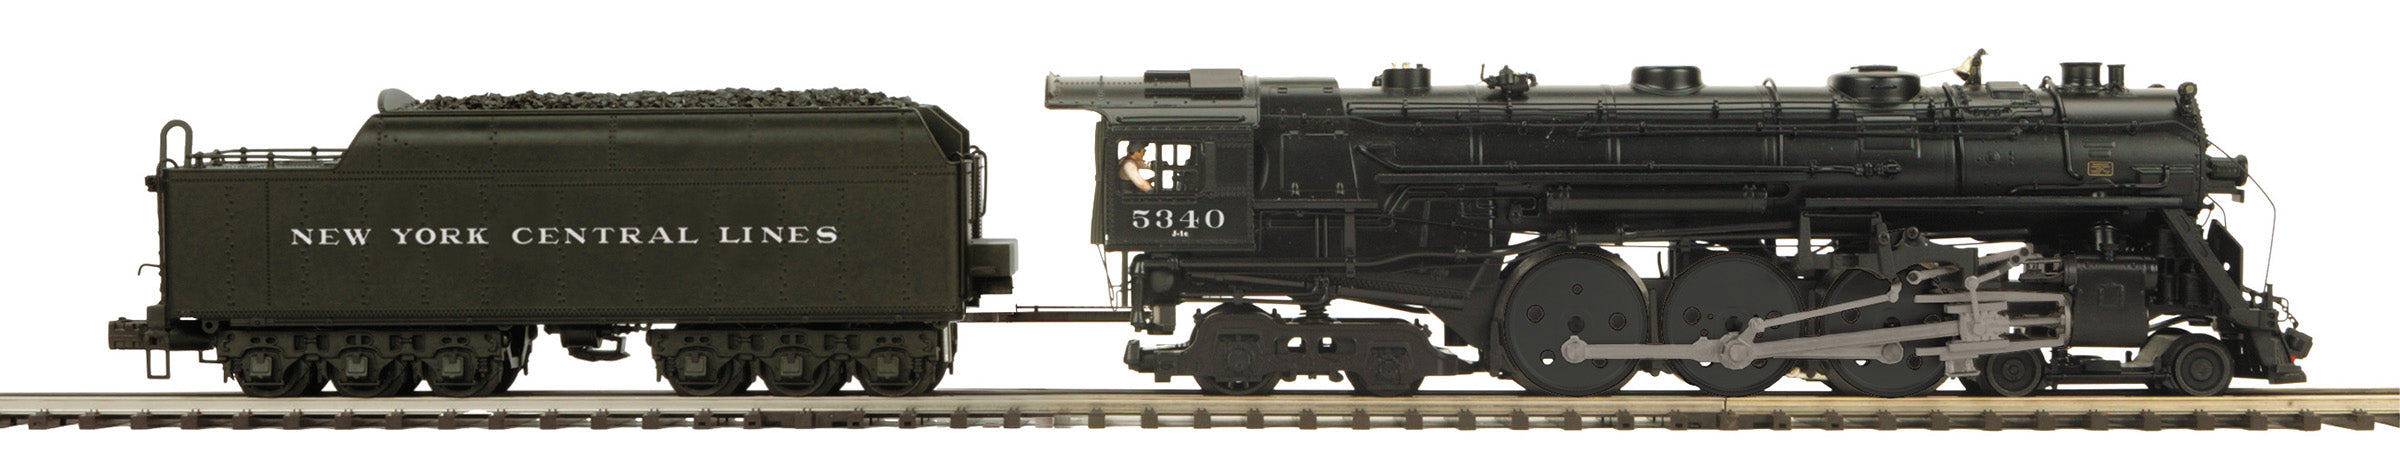 MTH 20-3865-1 - 4-6-4 J-1e Hudson Steam Engine "New York Central Lines" #5340 w/ PS3